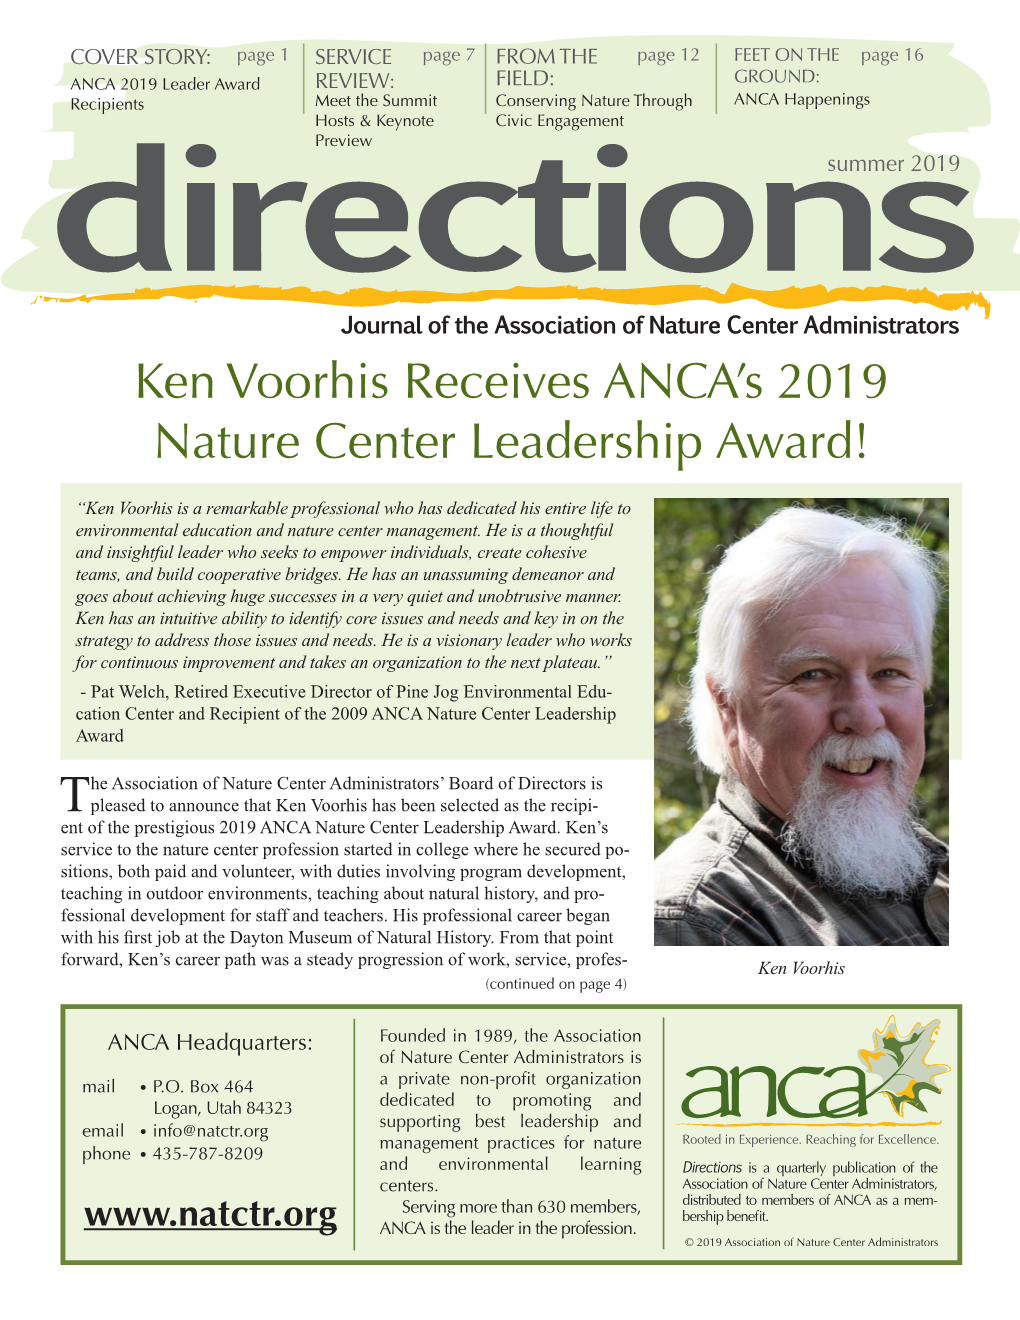 Ken Voorhis Receives ANCA's 2019 Nature Center Leadership Award!